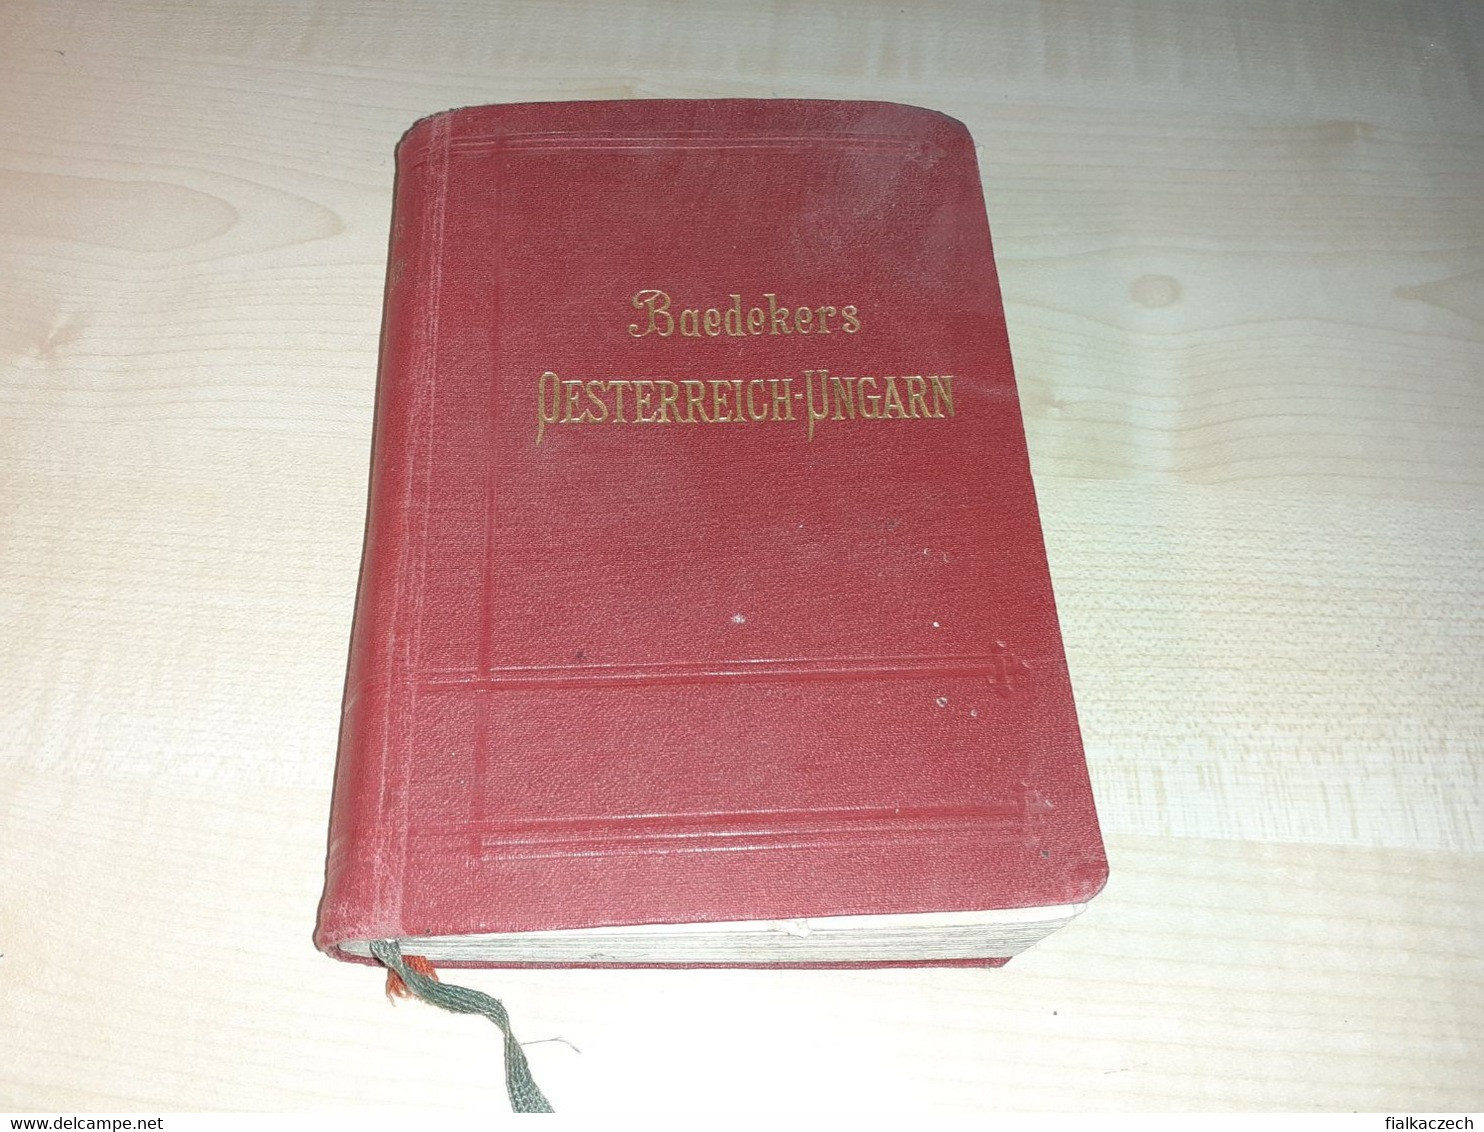 Baedekers, Österreich - Ungarn, Belgrad, Cetinje, Bukarest, Tour Guide, 1910 - Leipzig, Austria - Hungary - Oesterreich